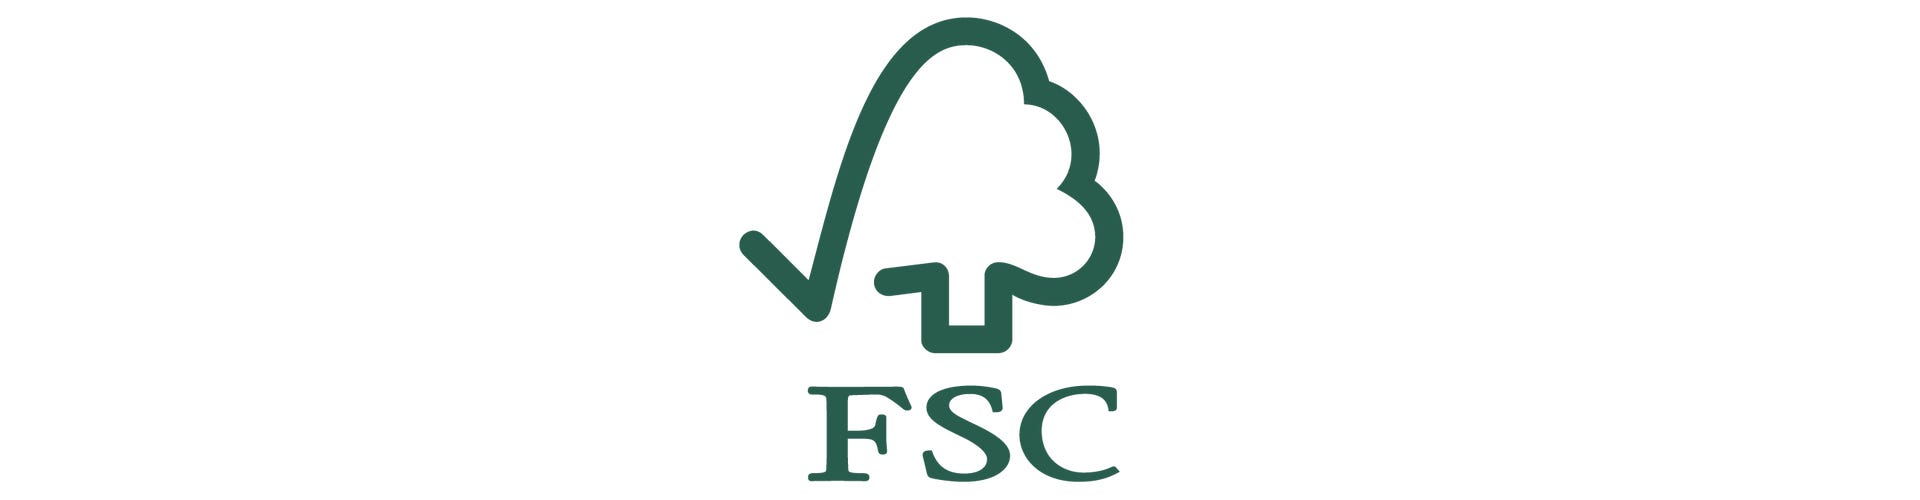 forest_stewardship_council-logo_brandlogos.net_gj5fq.png